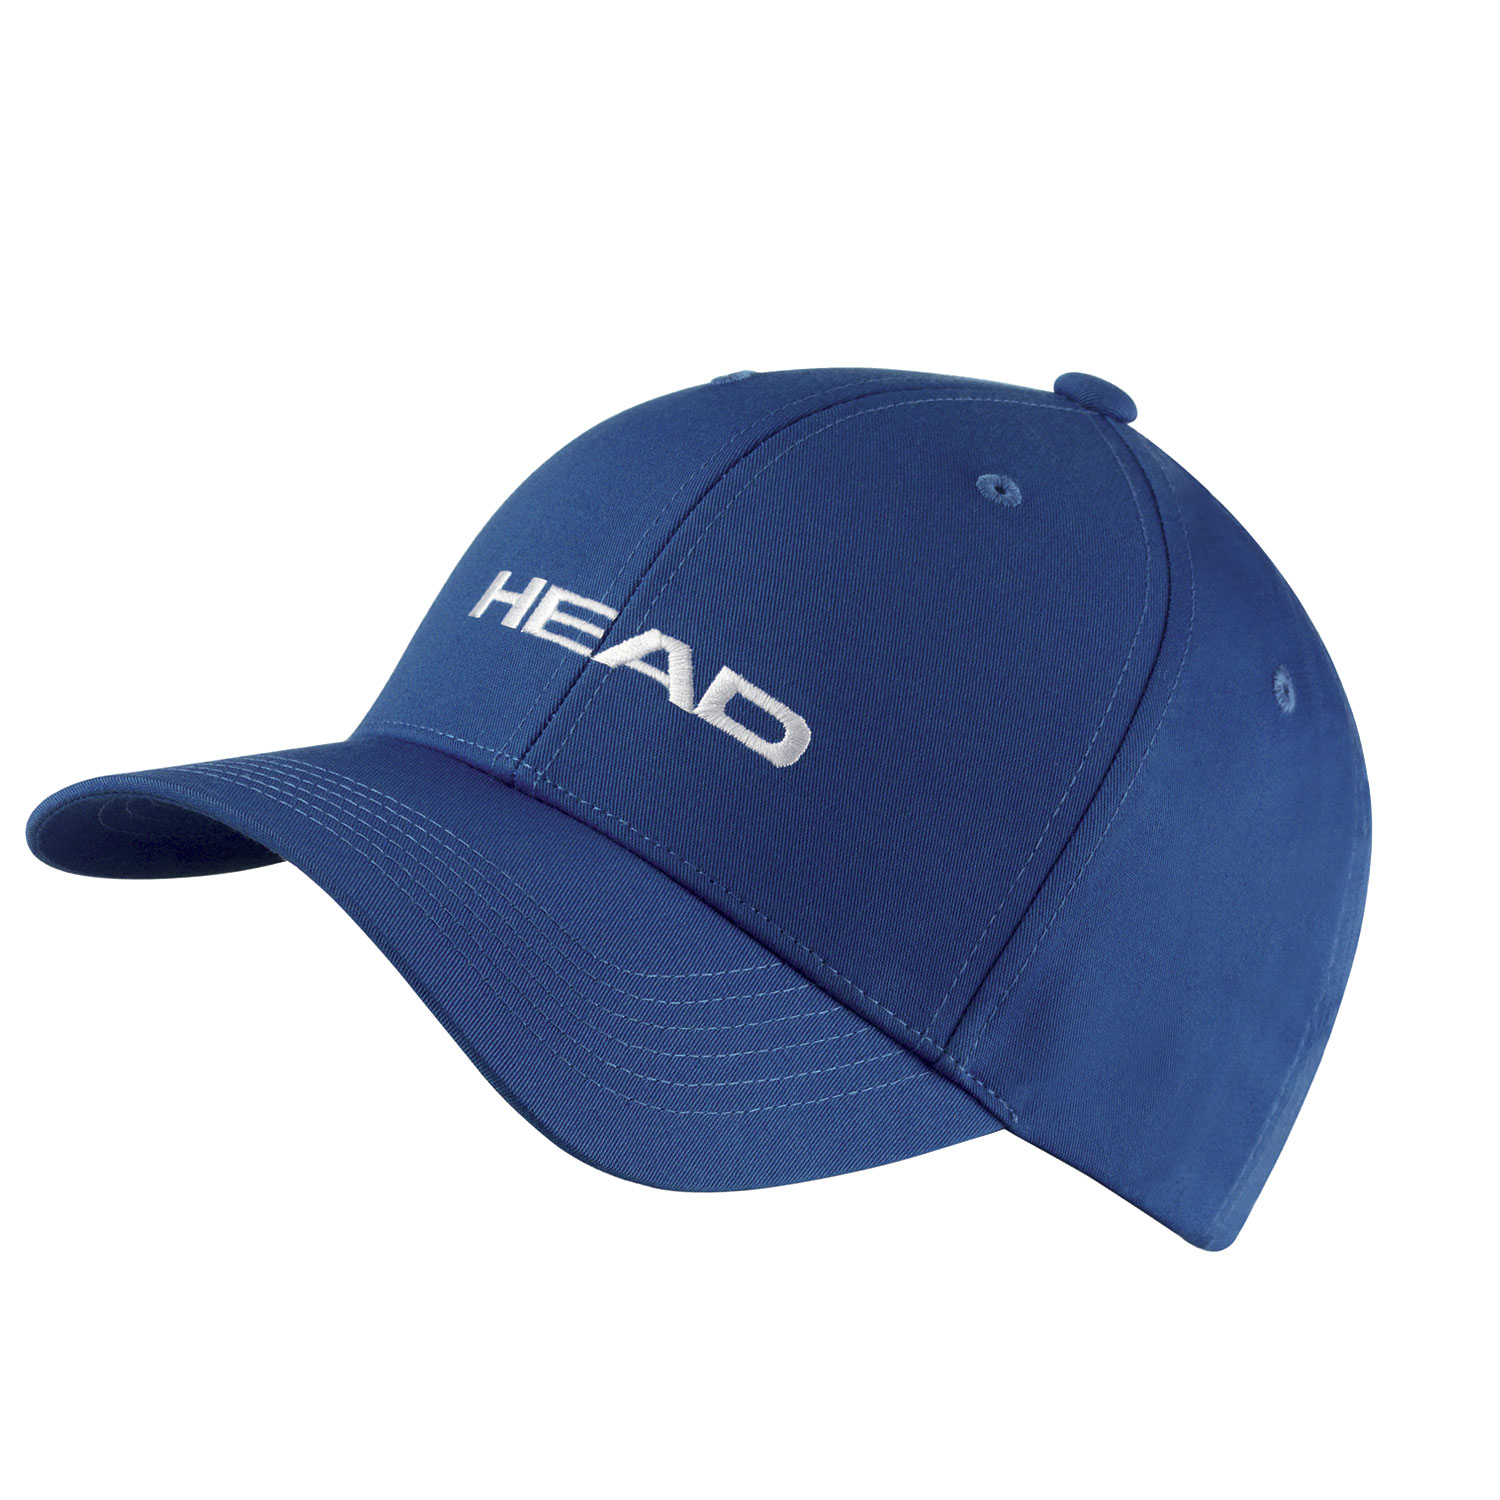 Head Promotion Gorra - Blue